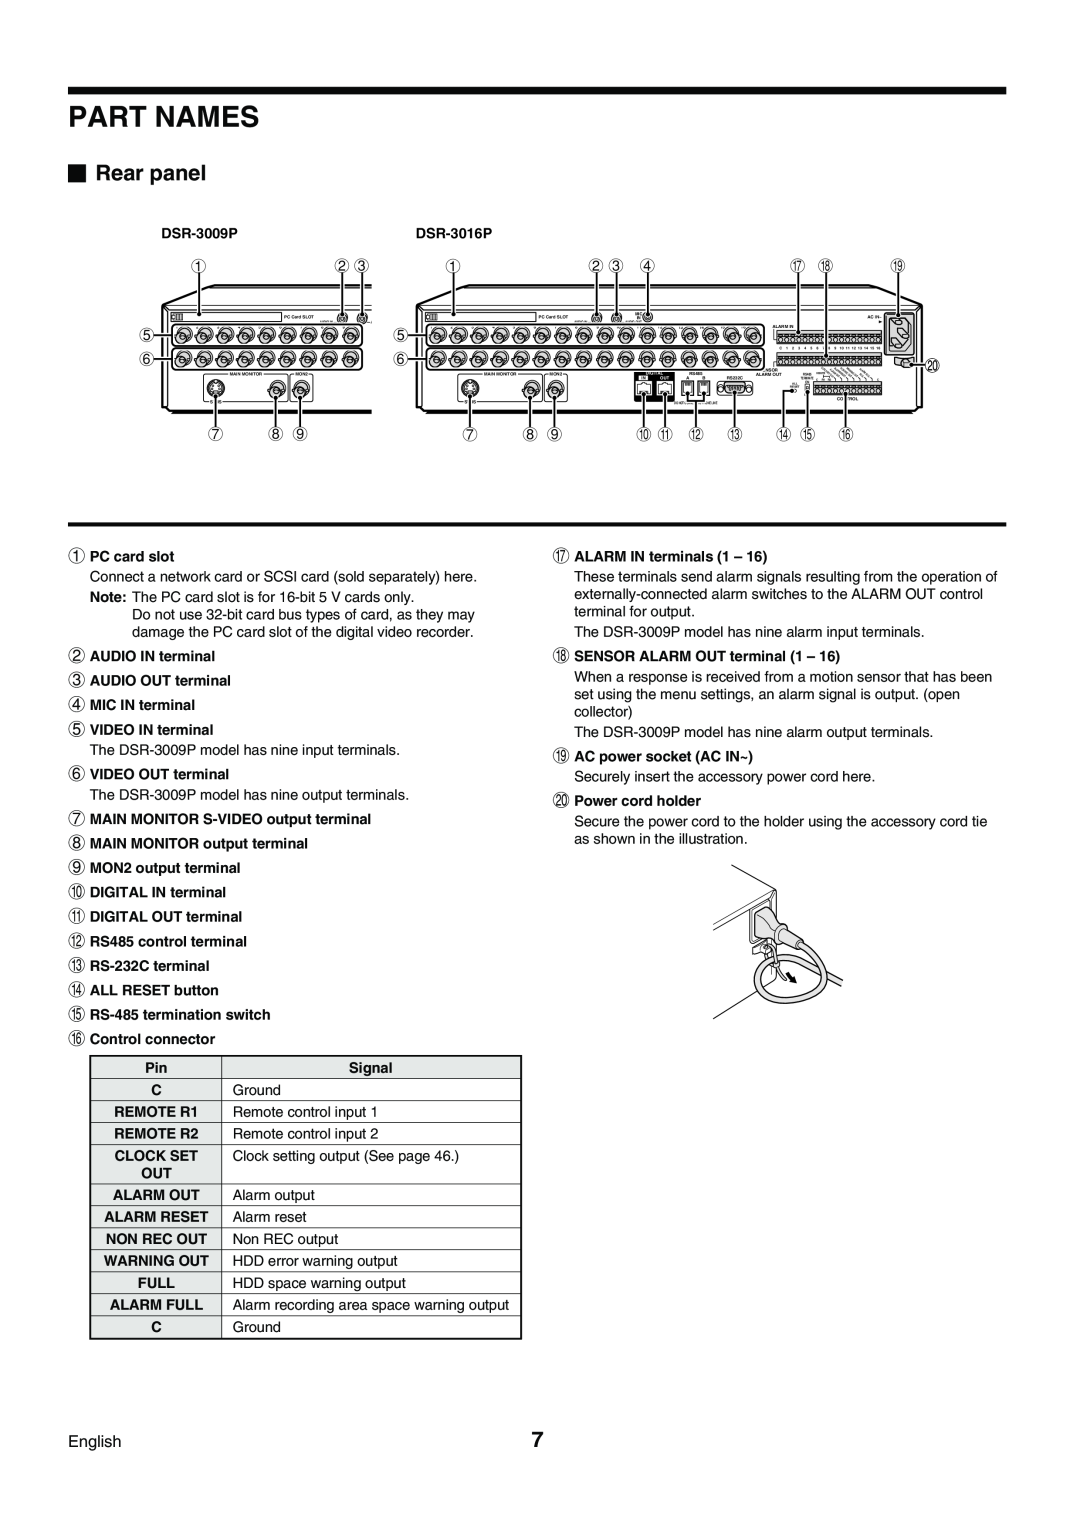 Sanyo DSR-3009P instruction manual Rear panel, Part Names, F G H I J K L 